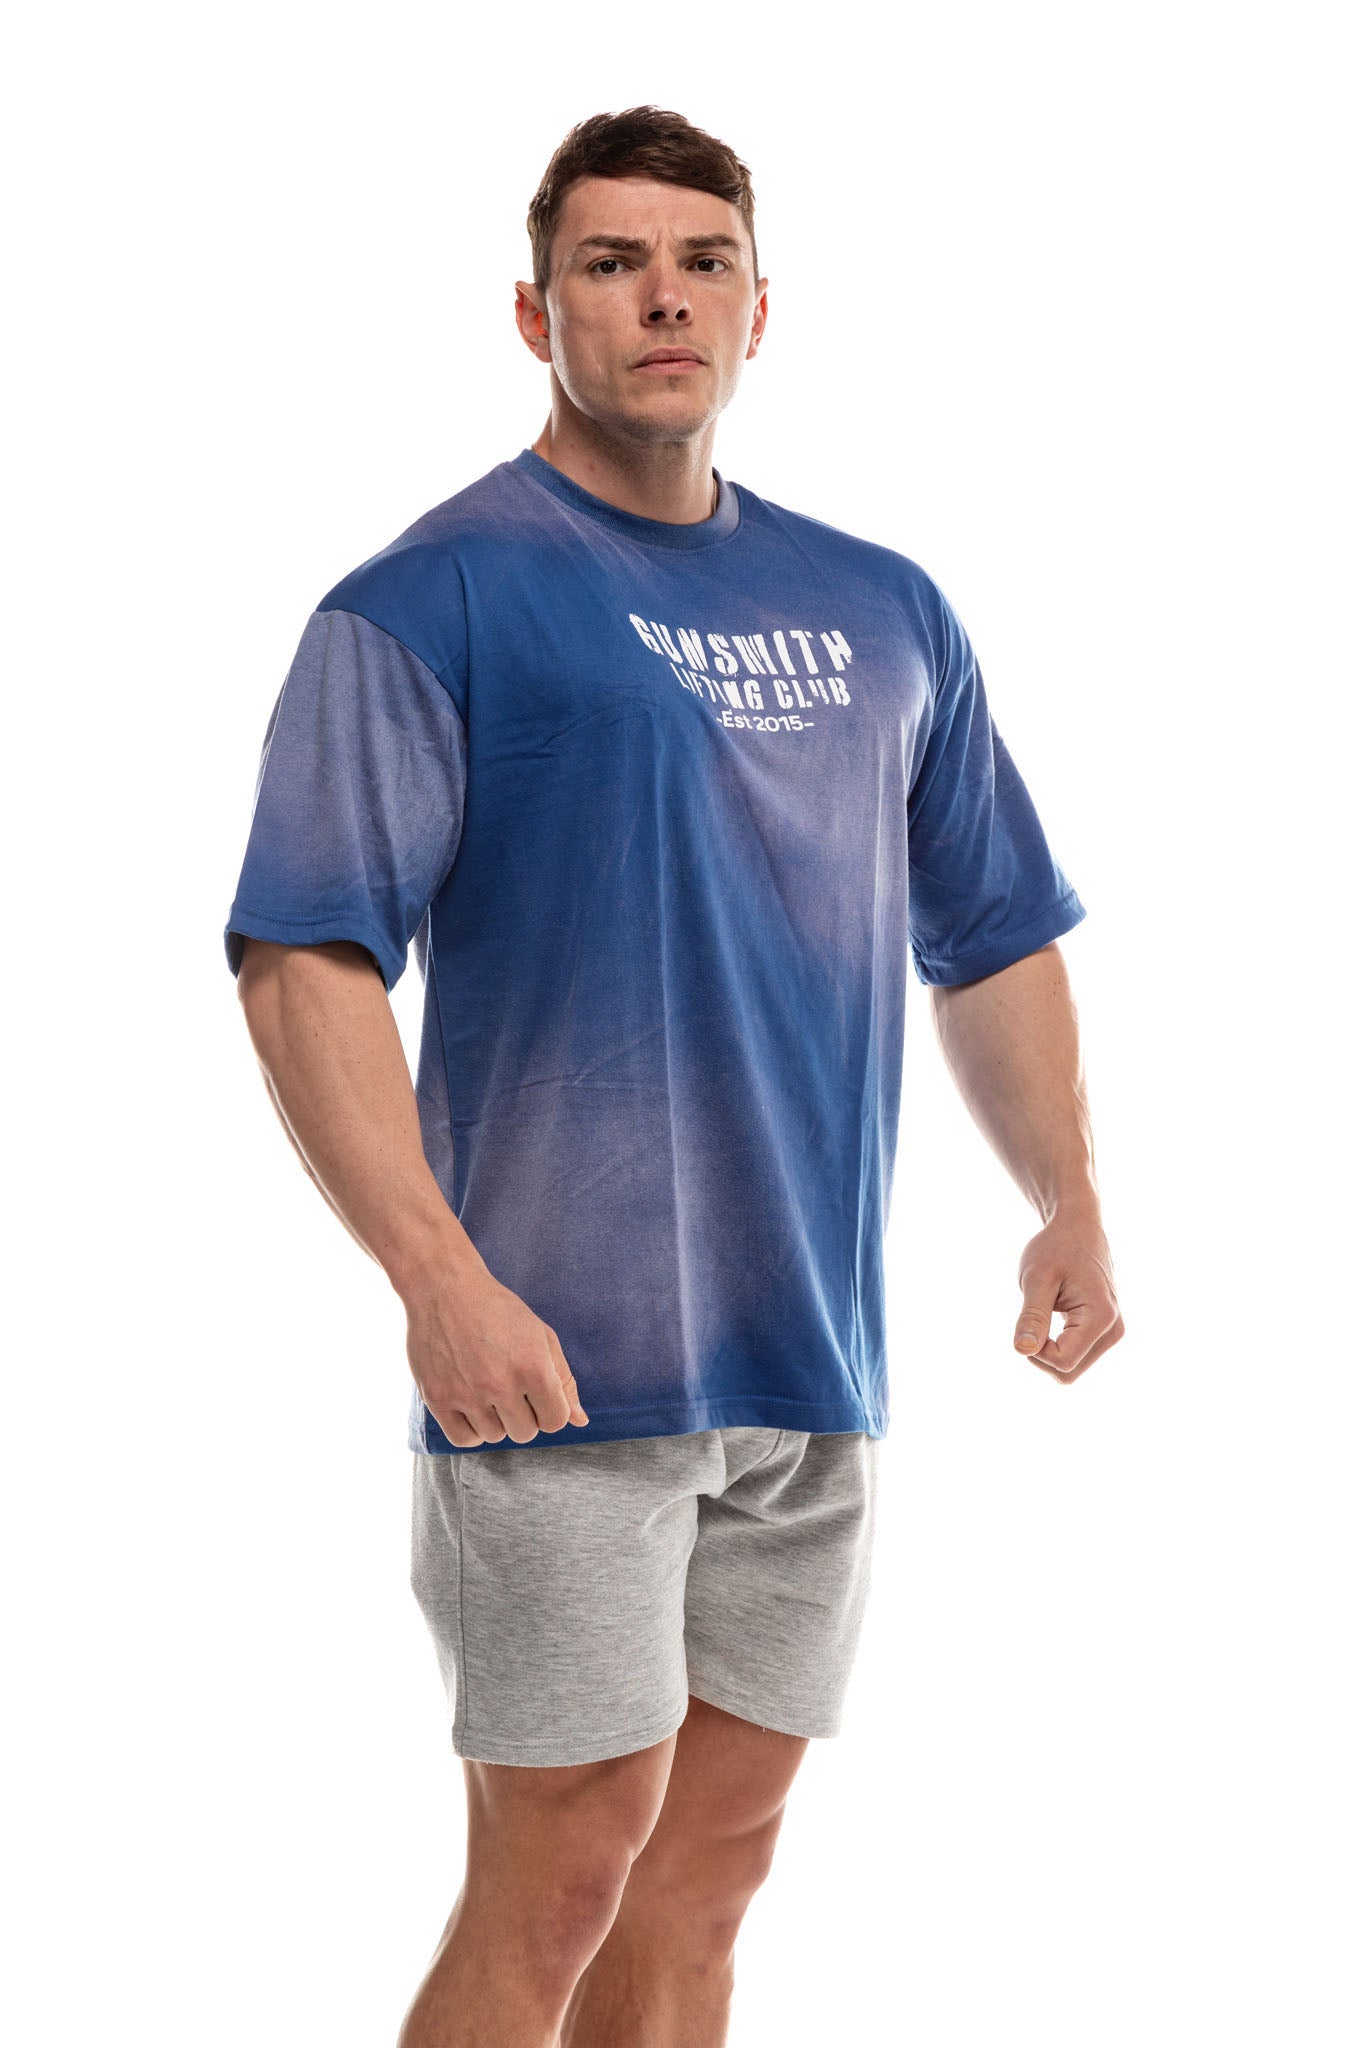 Lifting Club Acid Wash Oversized T-Shirt - Gunsmith Fitness